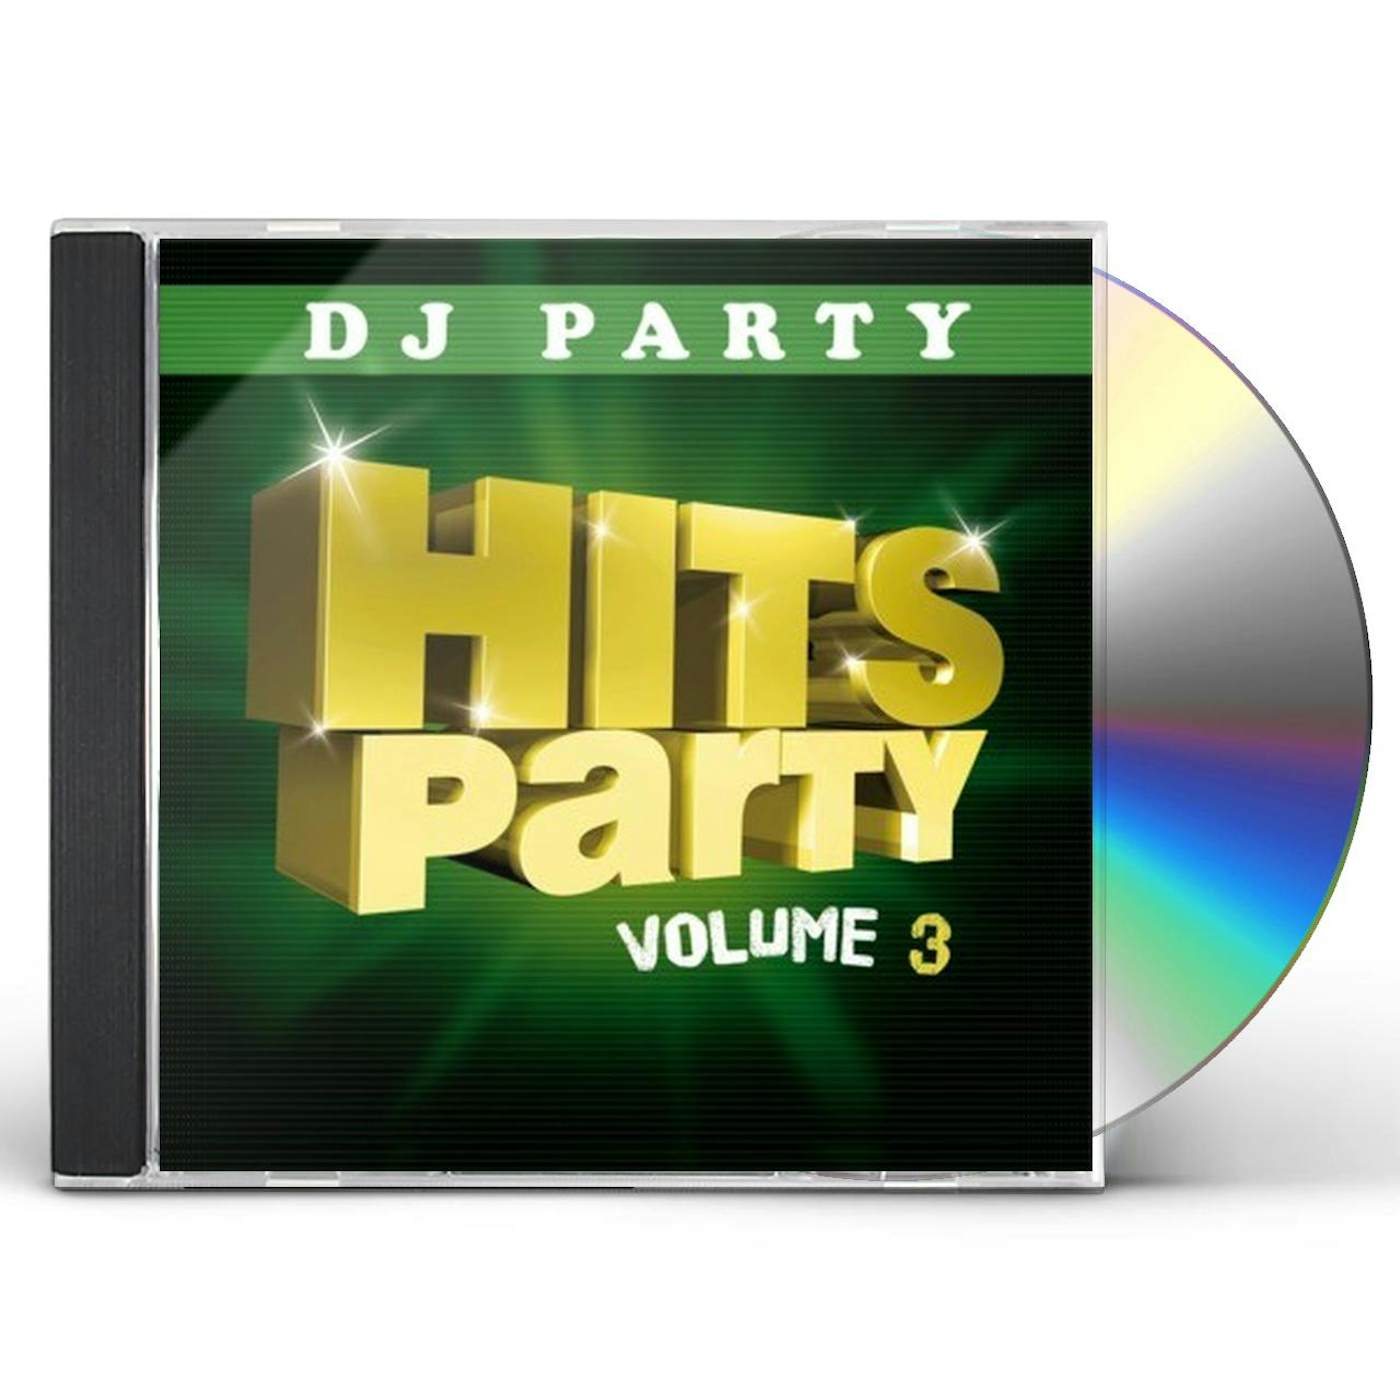 DJ Party HITS PARTY VOL. 3 CD